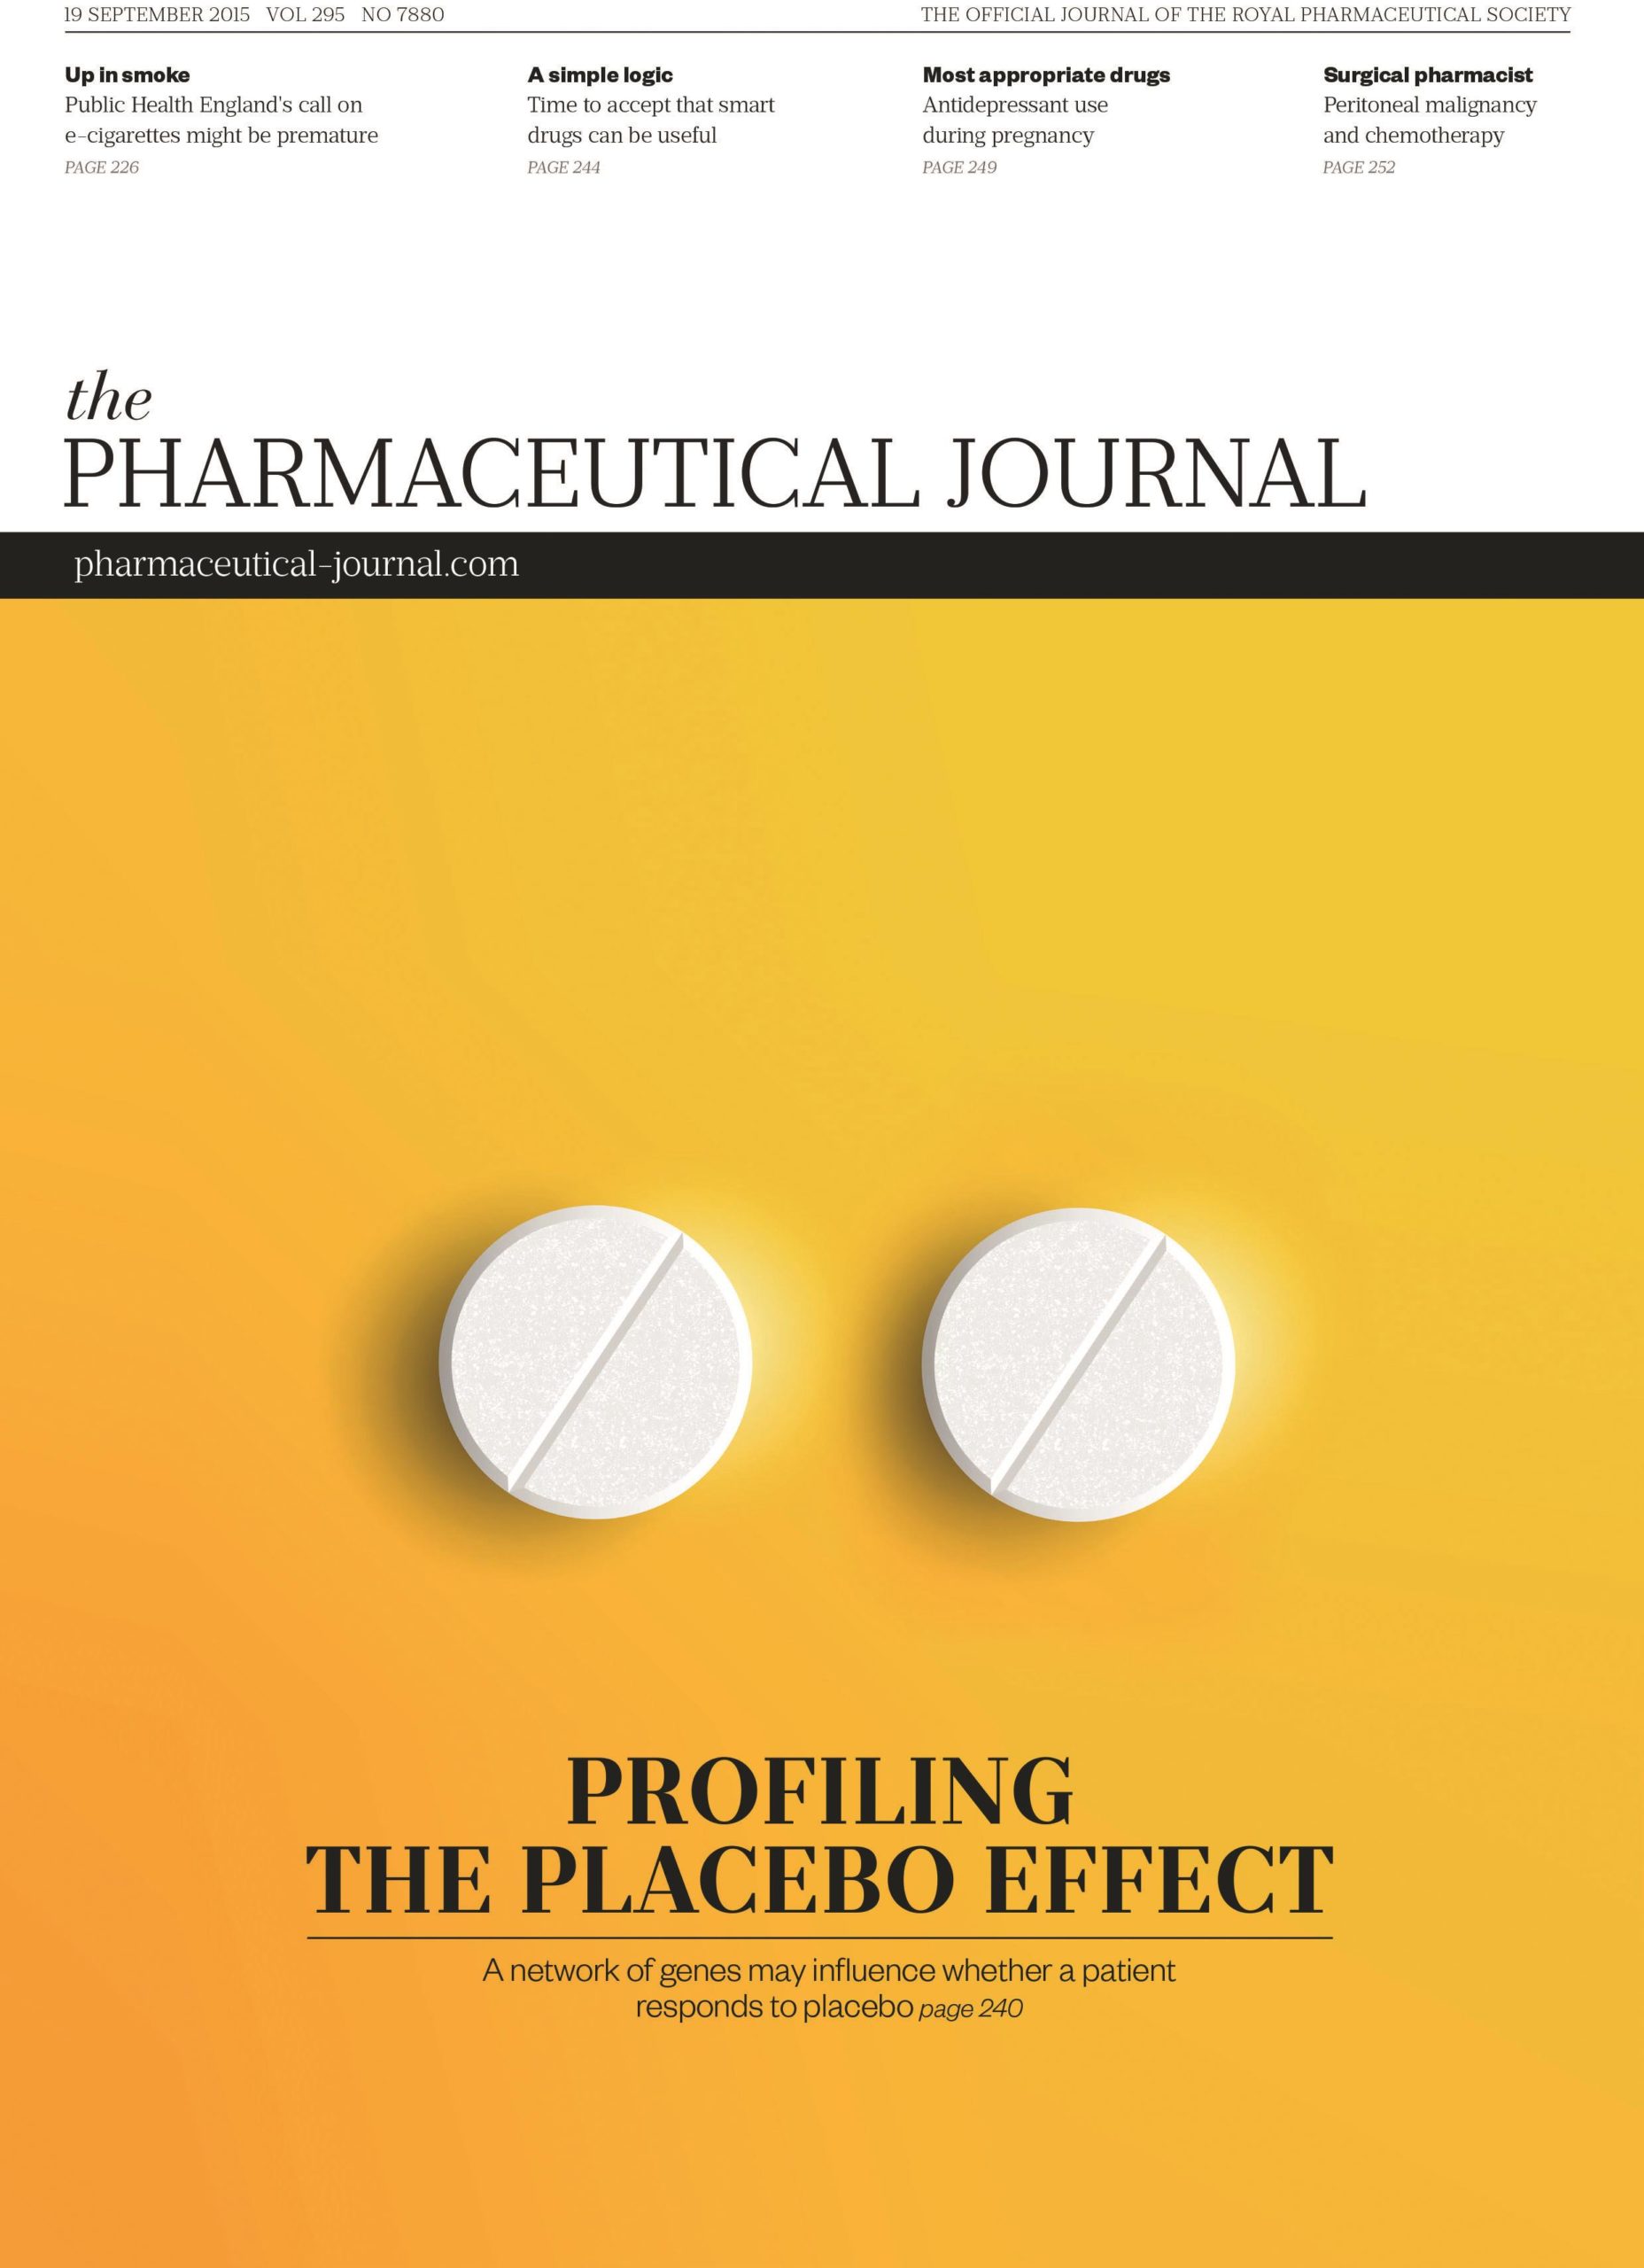 Publication issue cover for PJ, 19 September 2015, Vol 295, No 7880